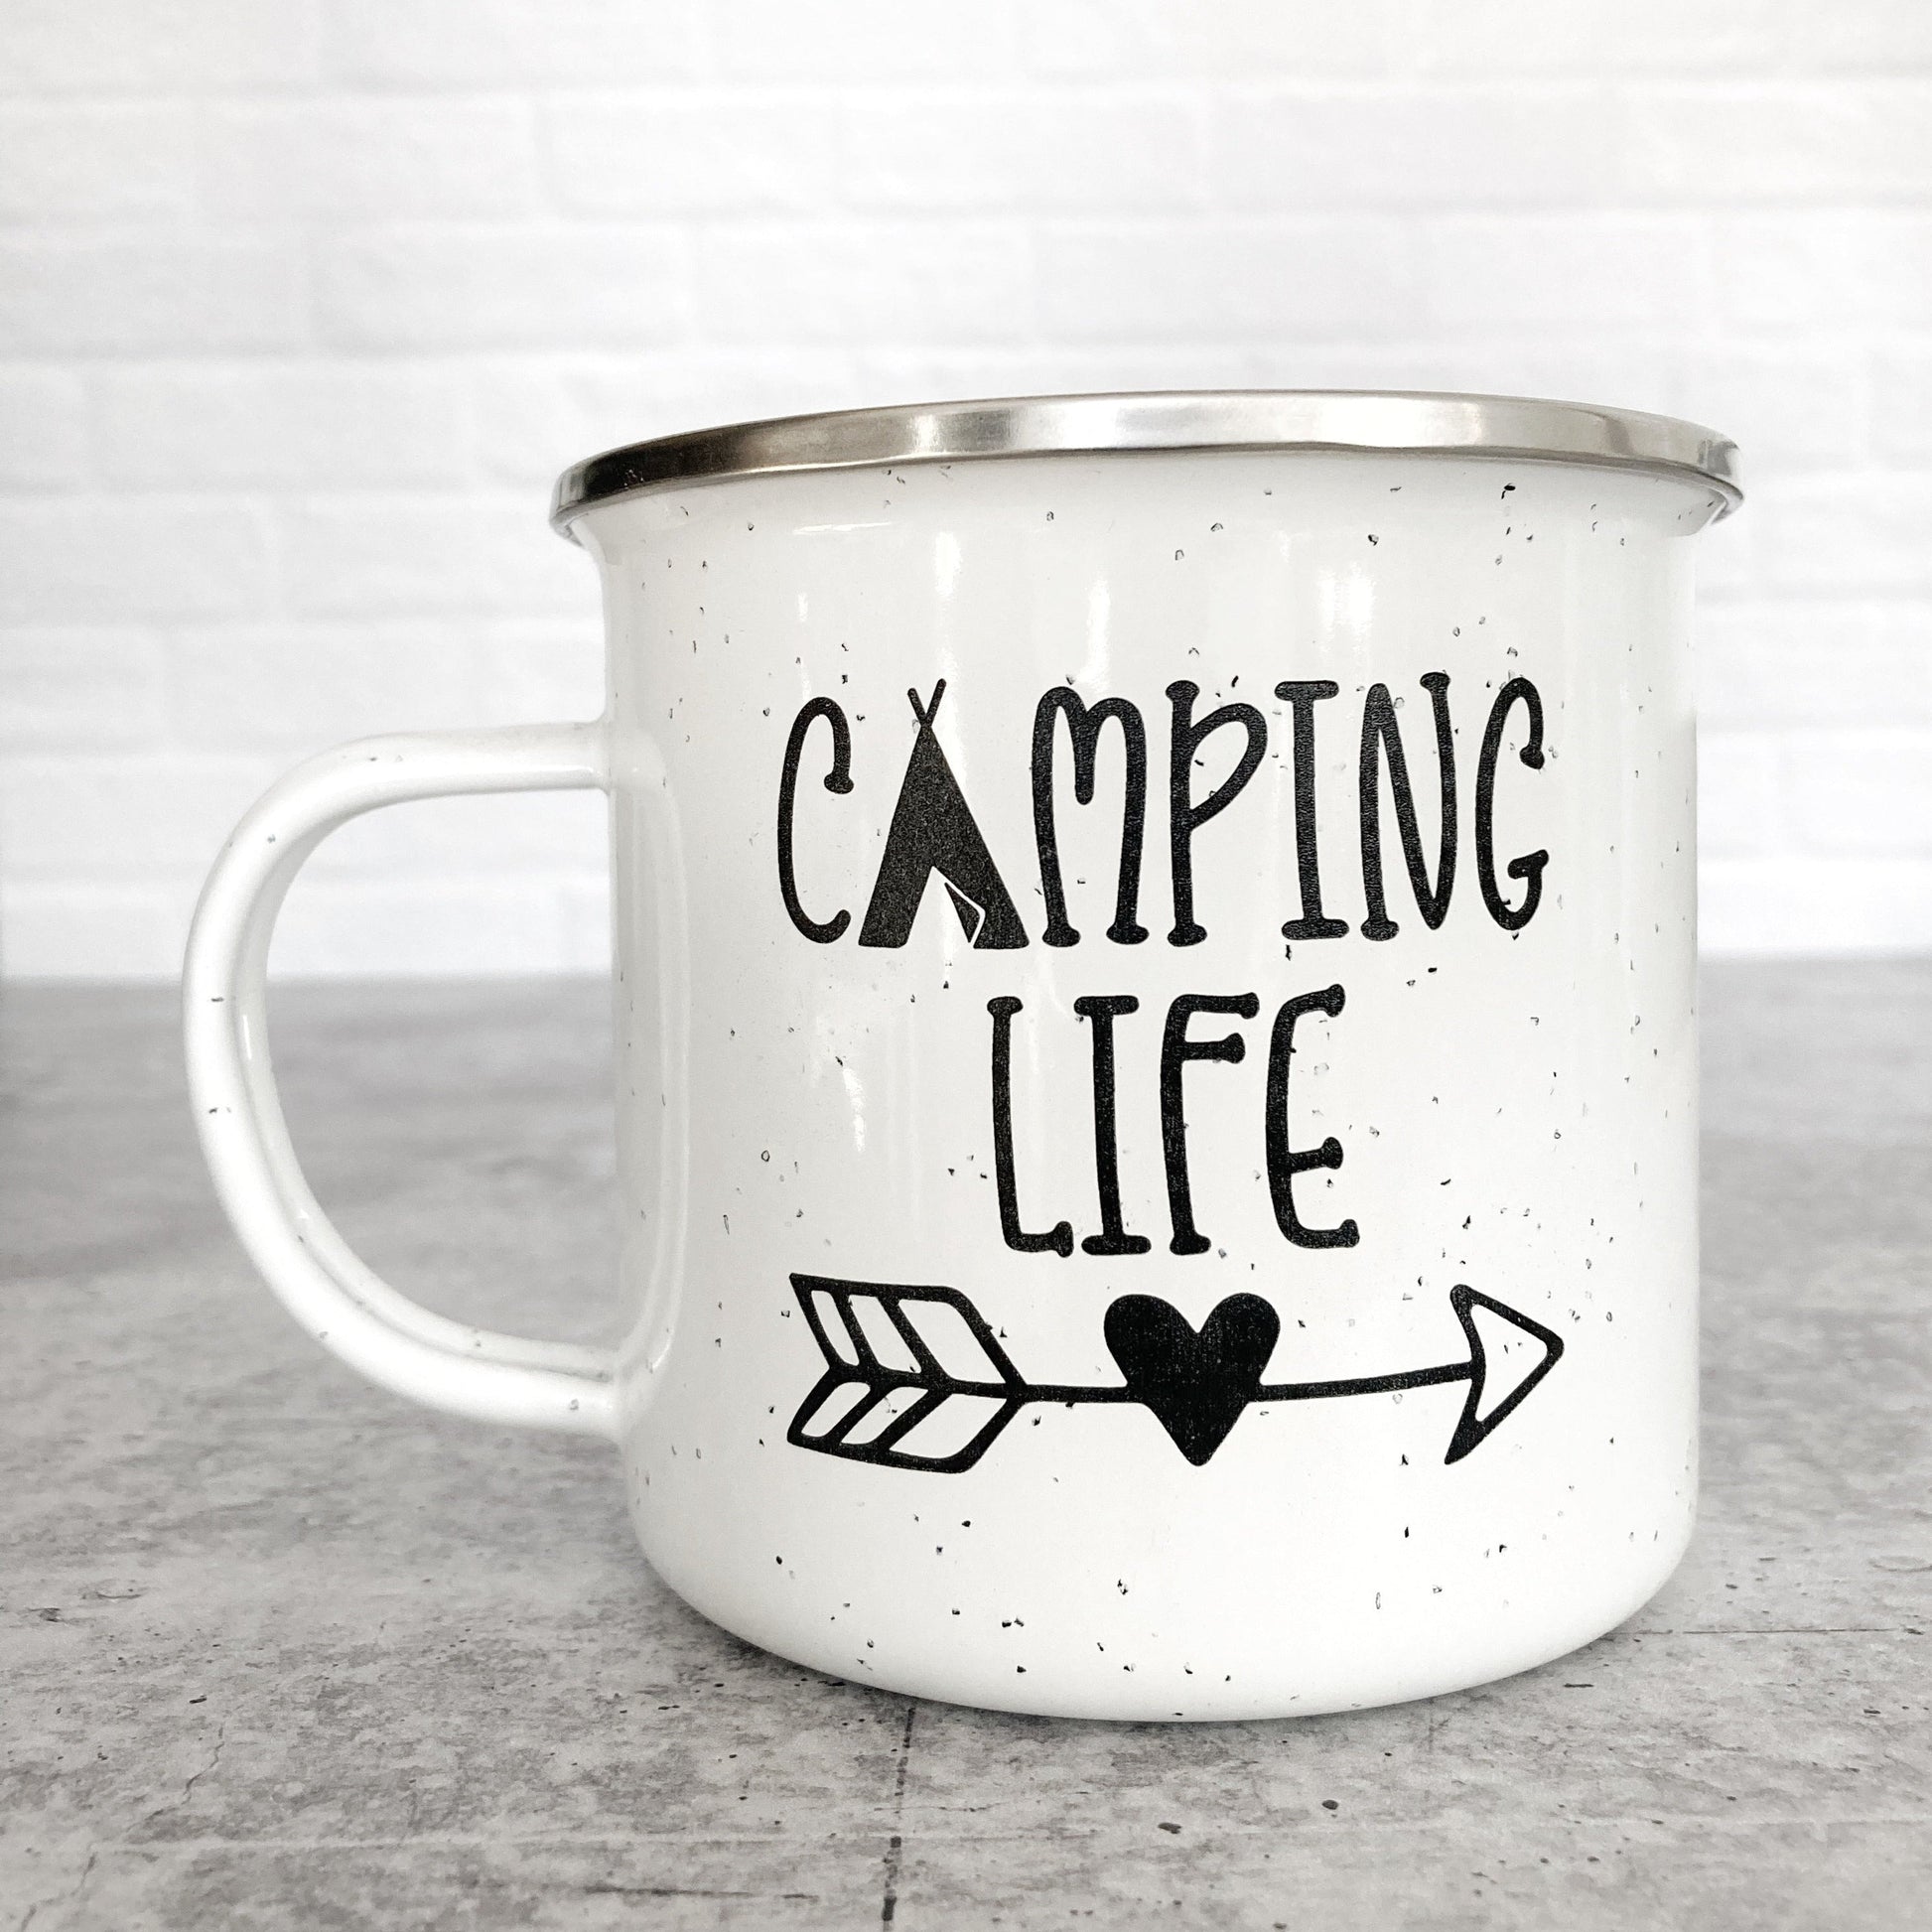 Camping Life design on a white enamel mug